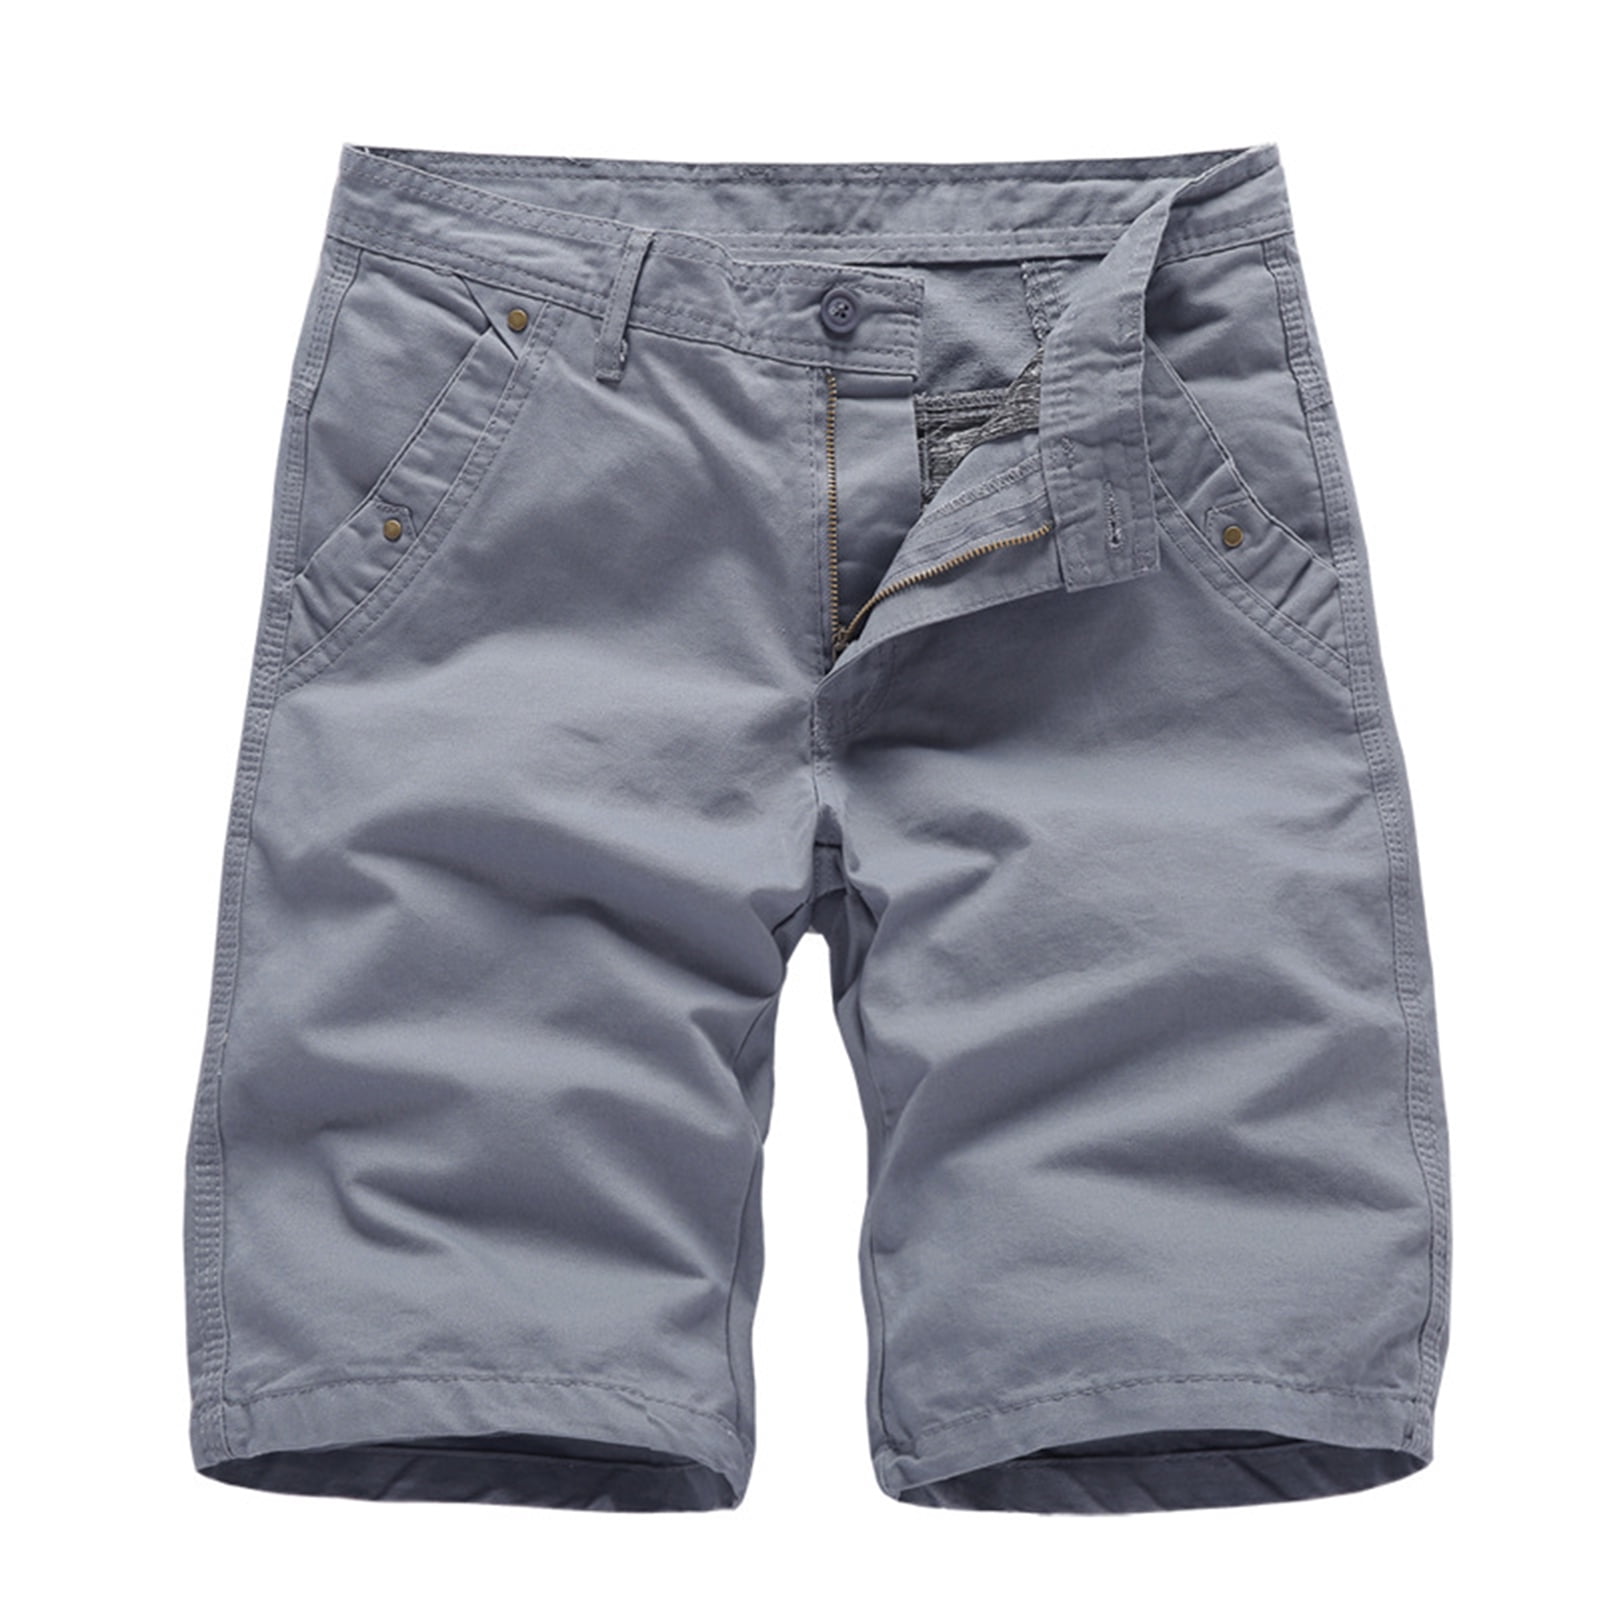 Free Shipping!Spring Mens casual fashion green shorts pants Size 30/32/34/36 